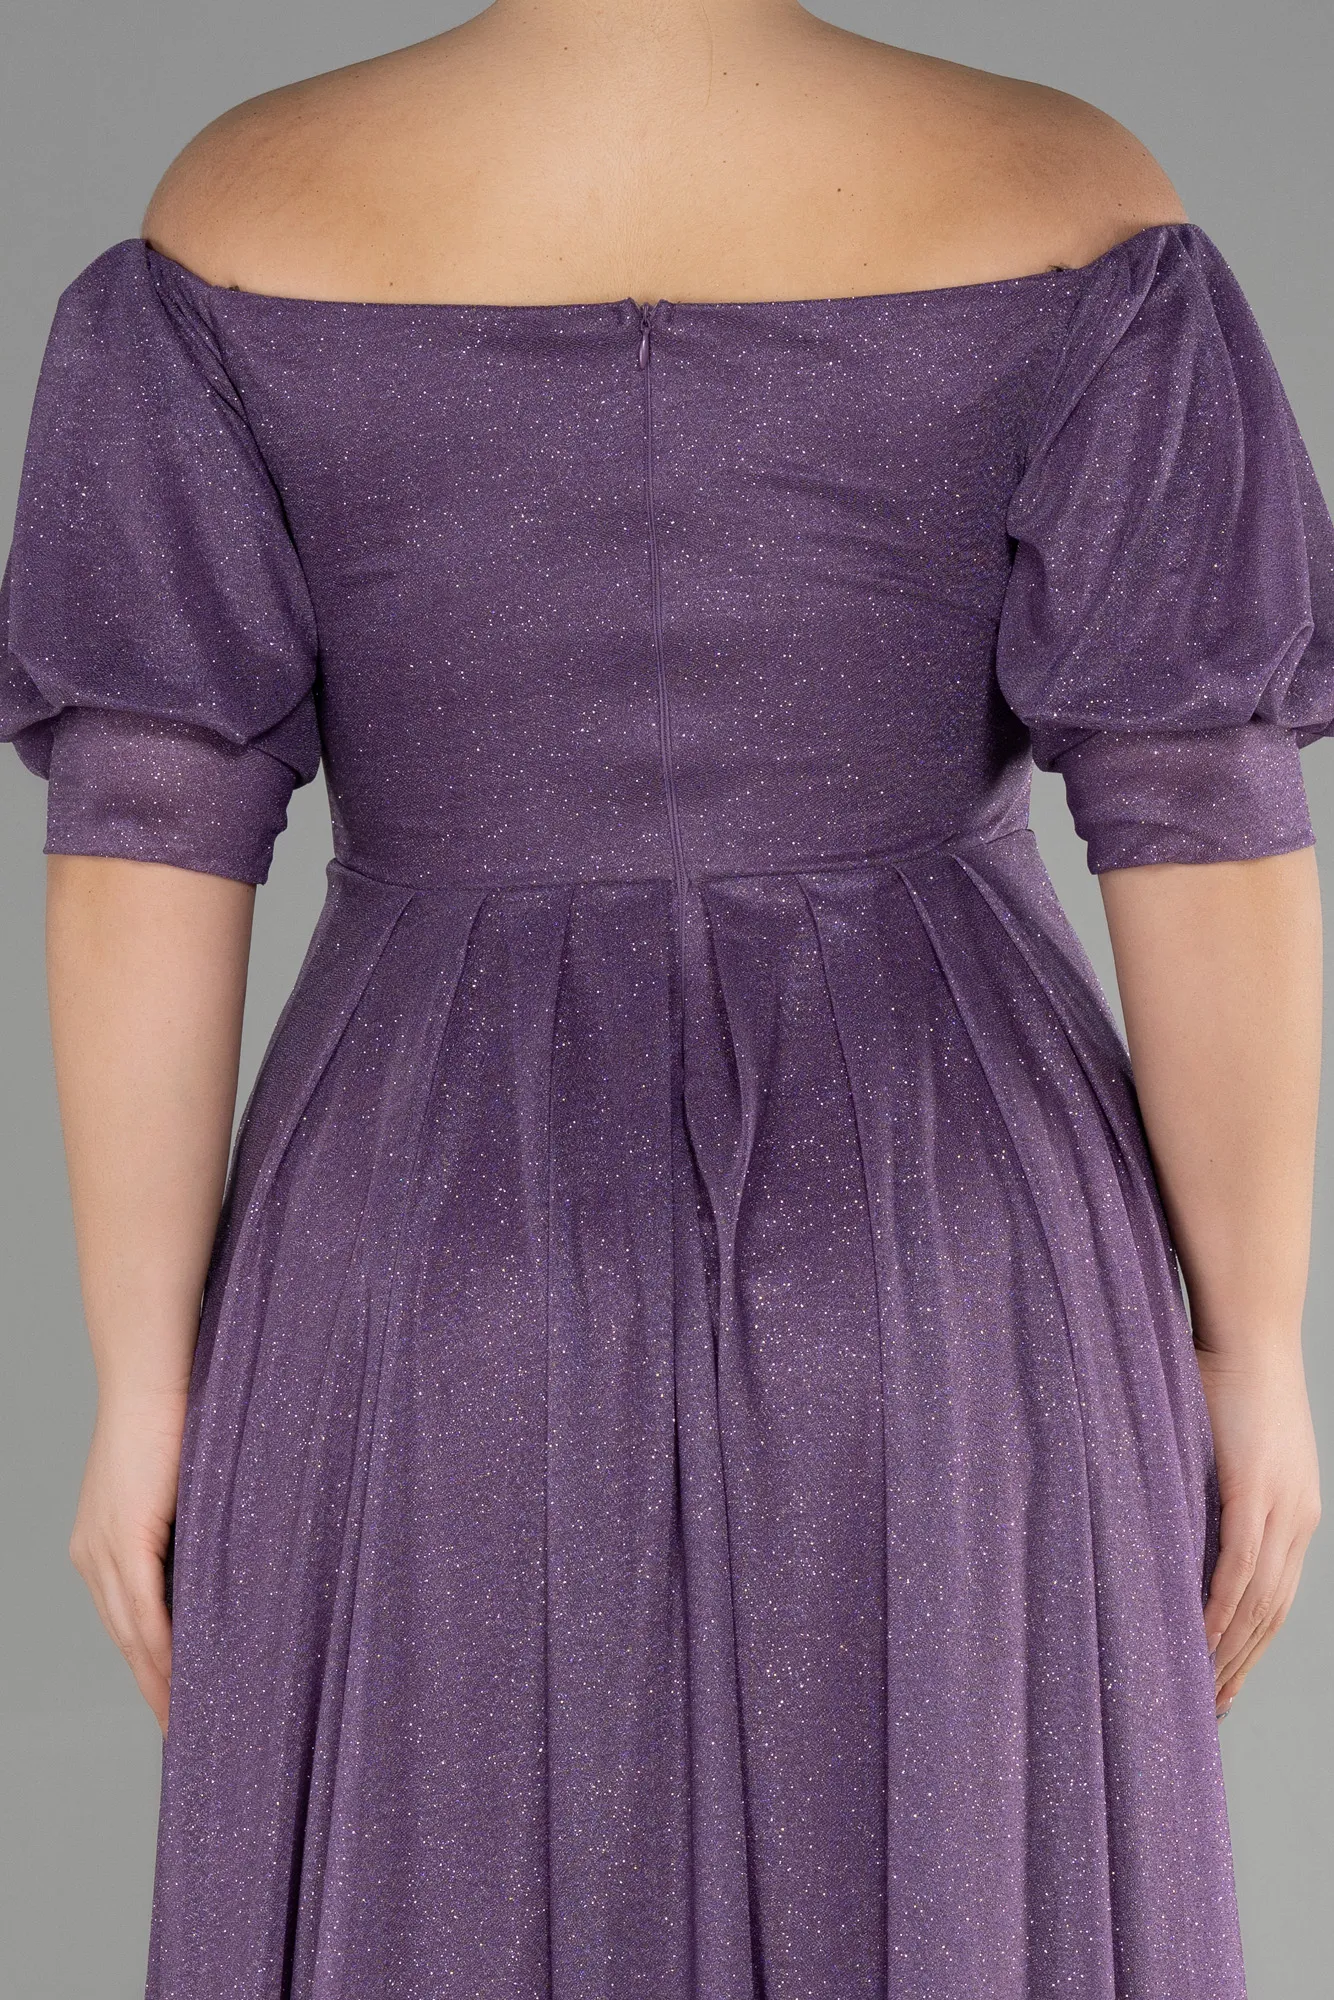 Lavender-Long Plus Size Evening Dress ABU3615